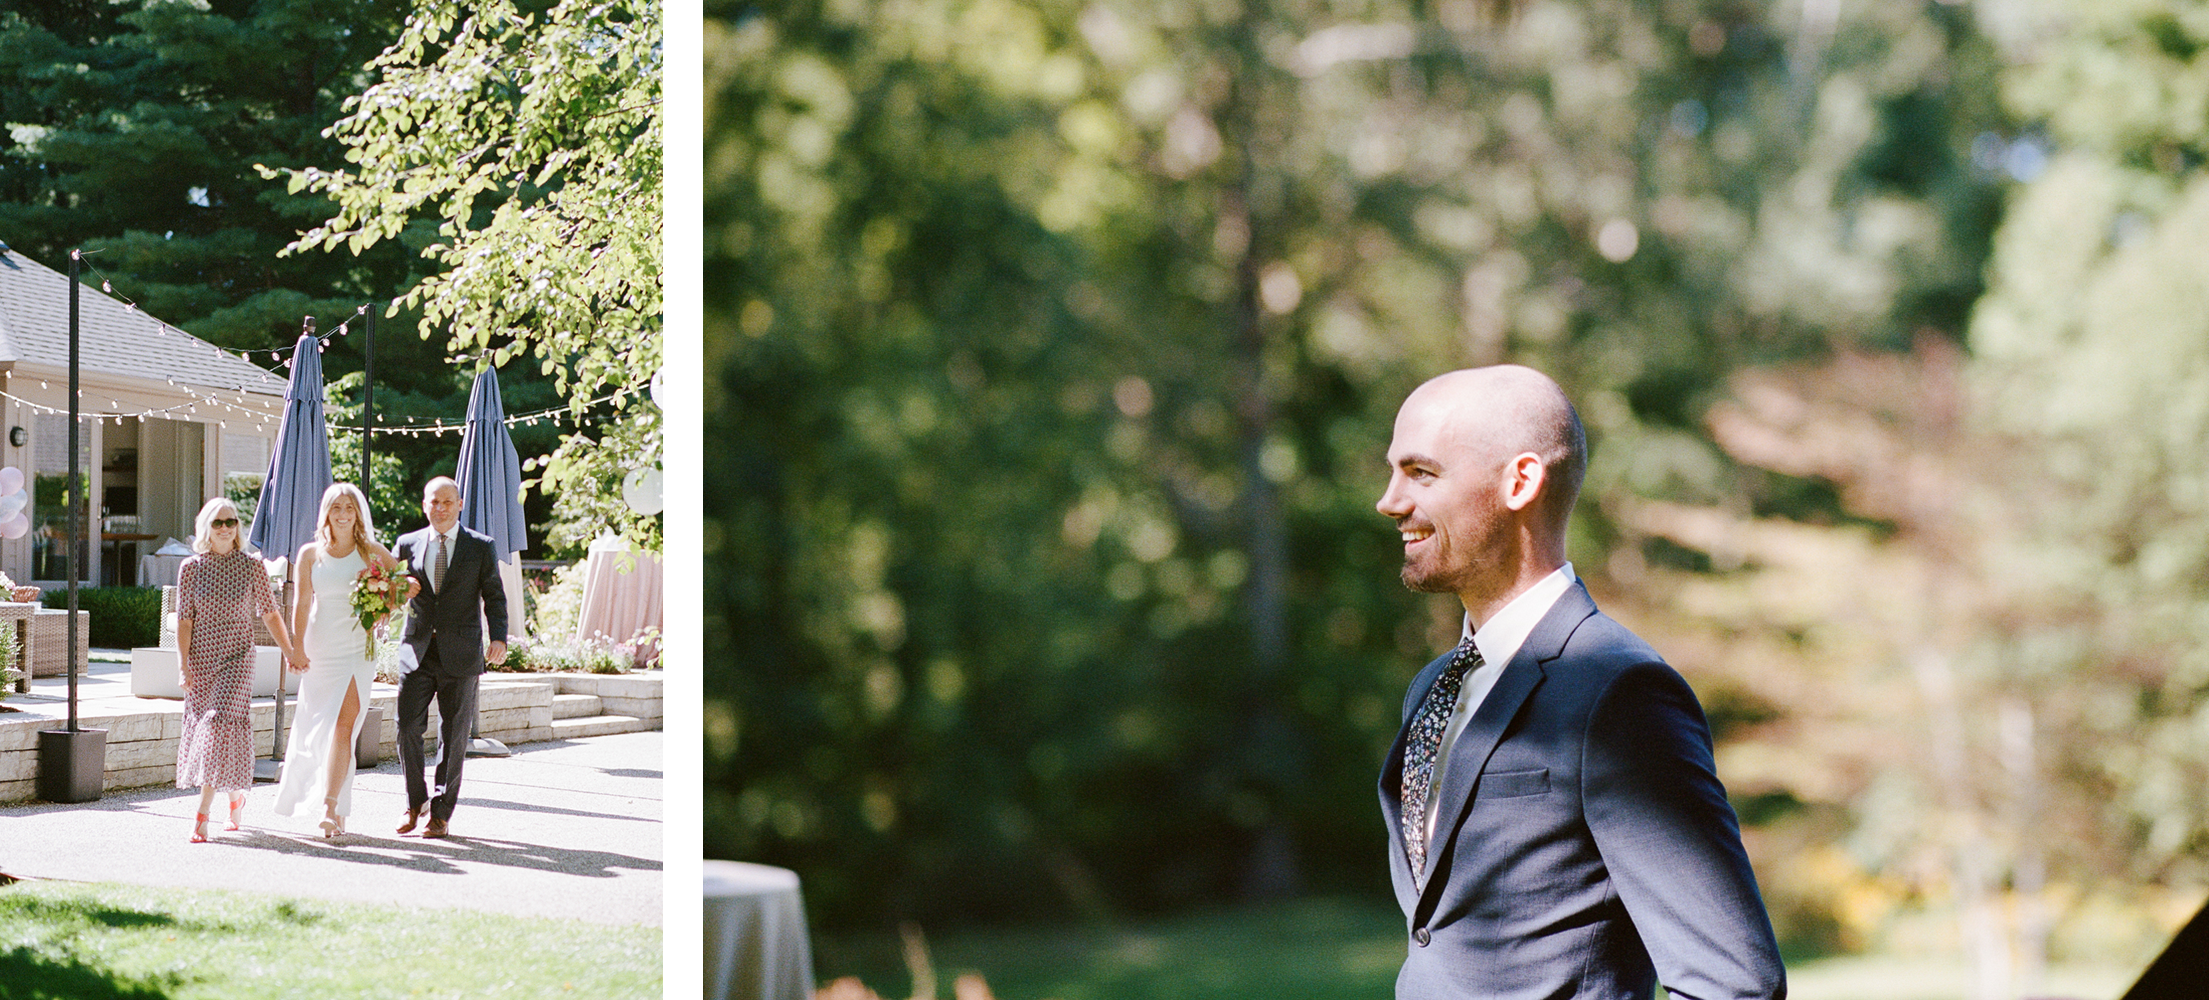 Analog-Film-Micro-Wedding-Photos-Inspiration-Backyard-Toronto-Ontario-30.PNG